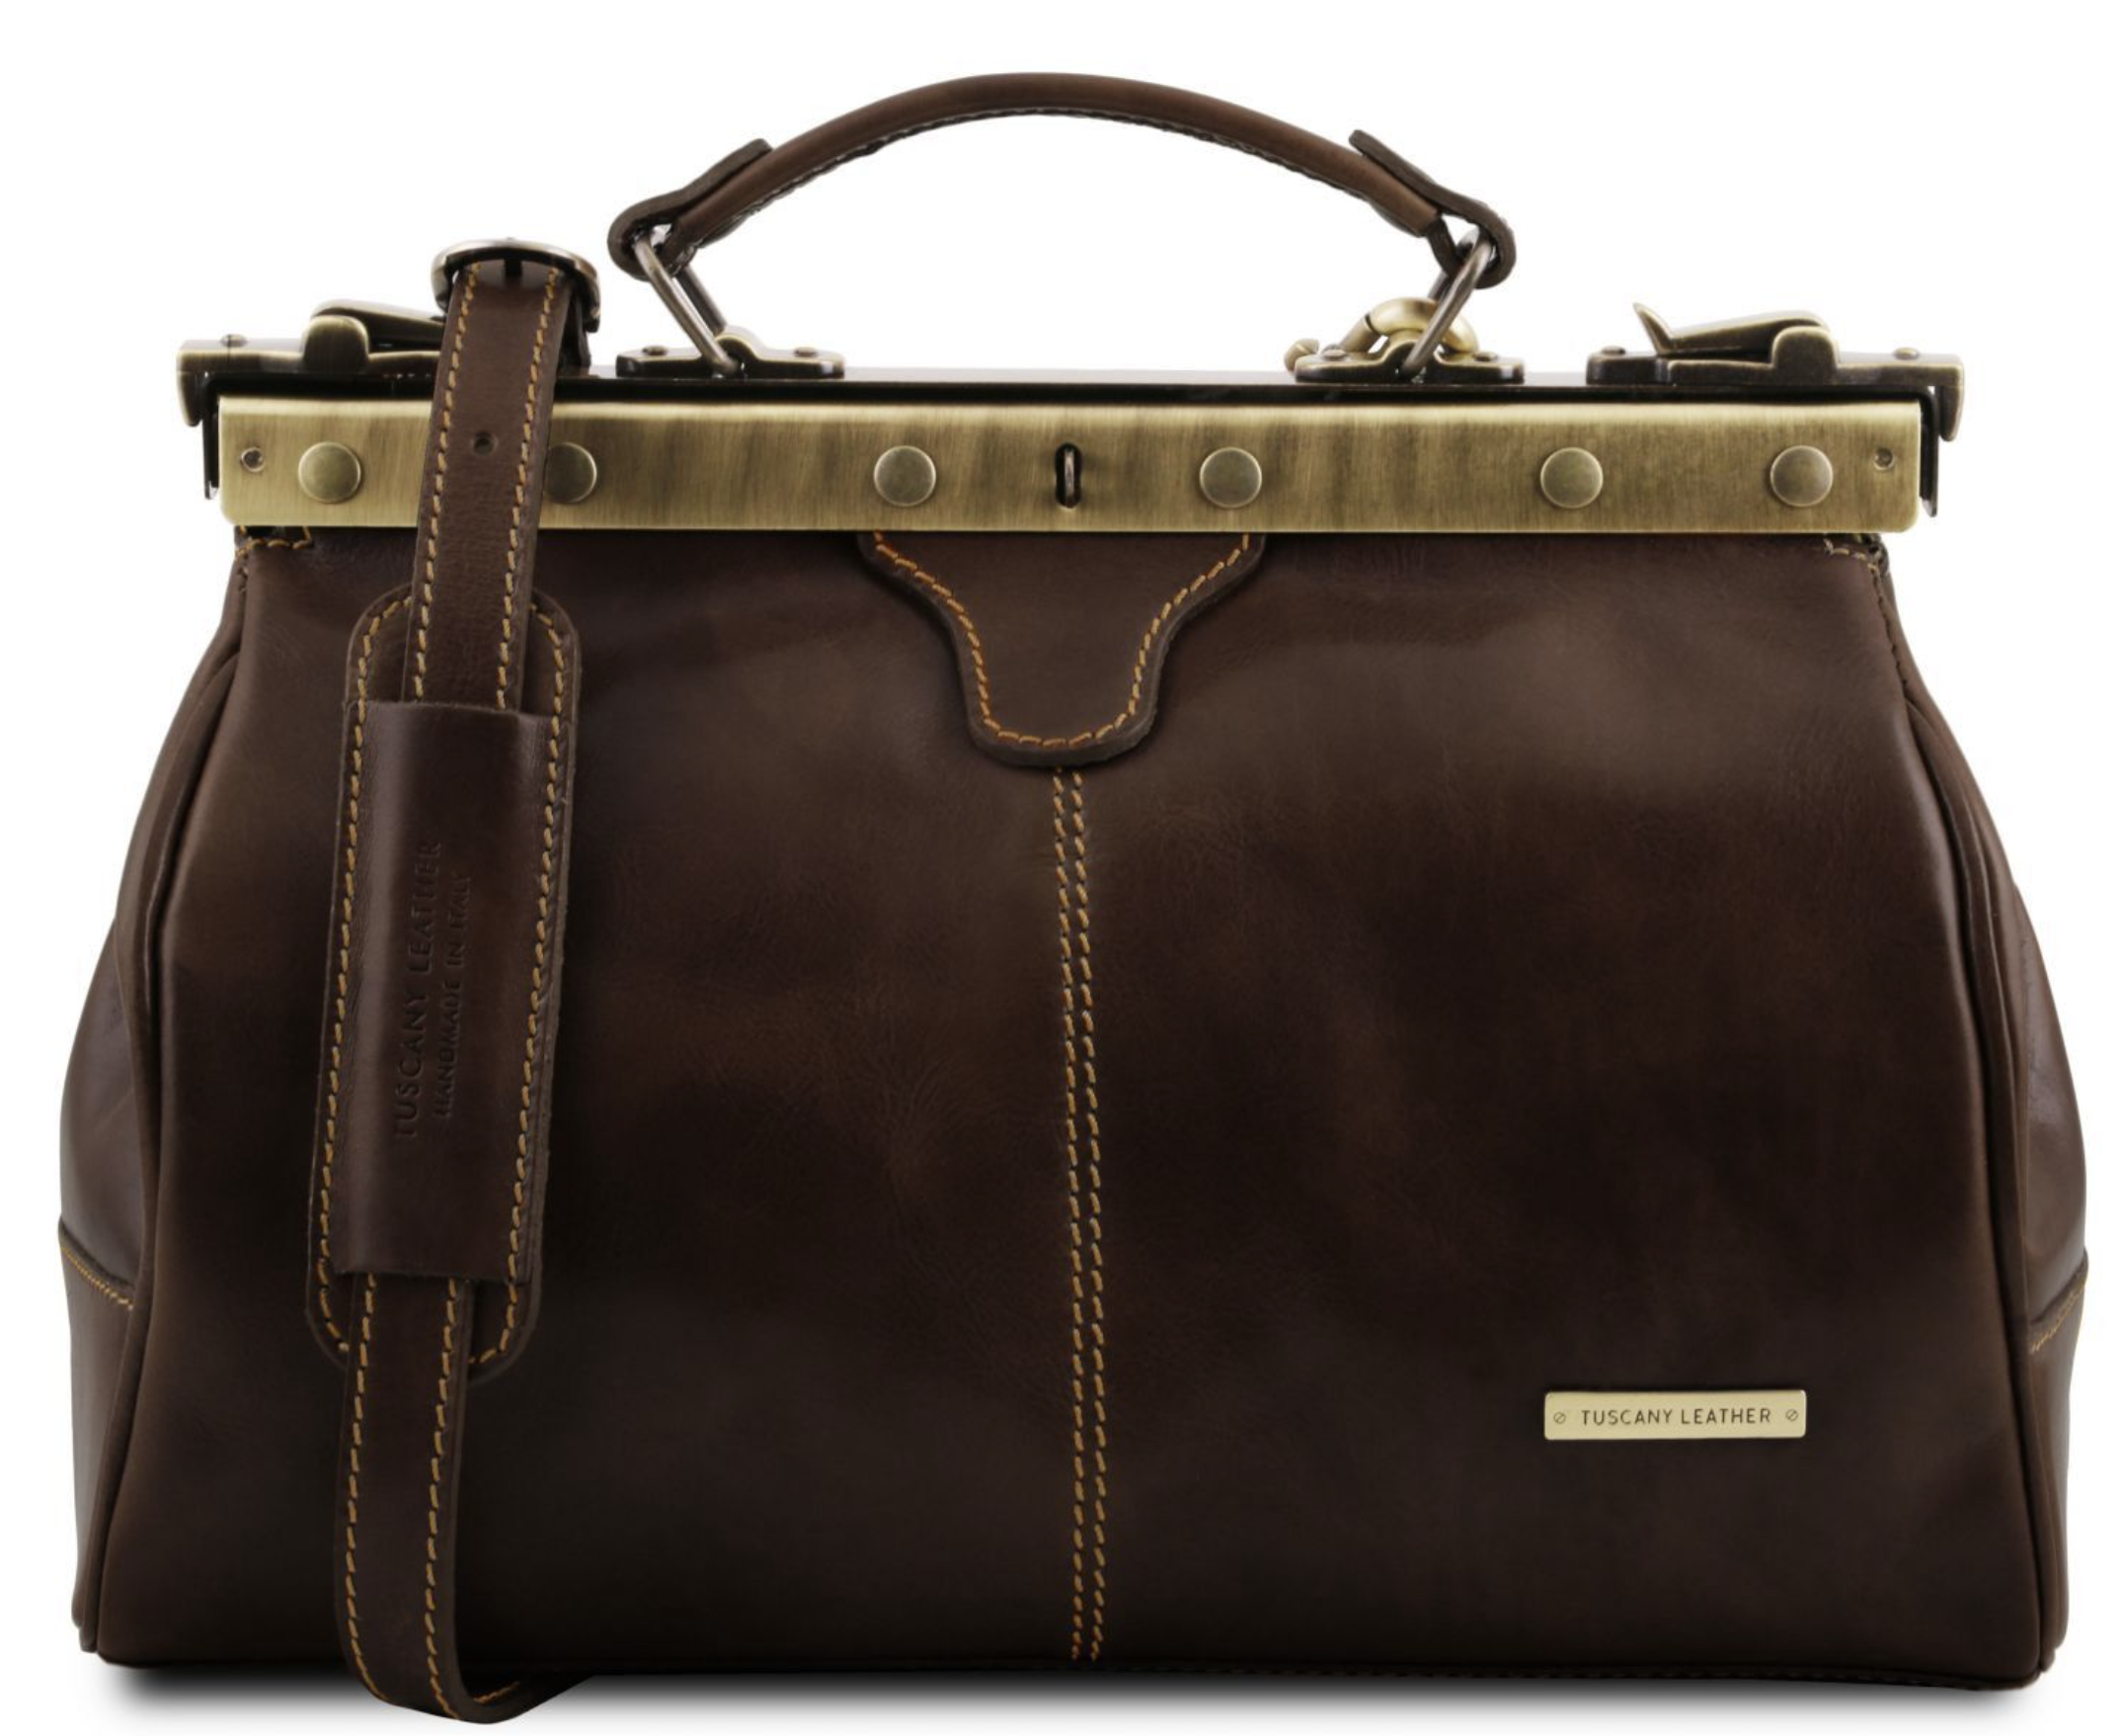 Madrid Gladstone Leather Bag - Small size